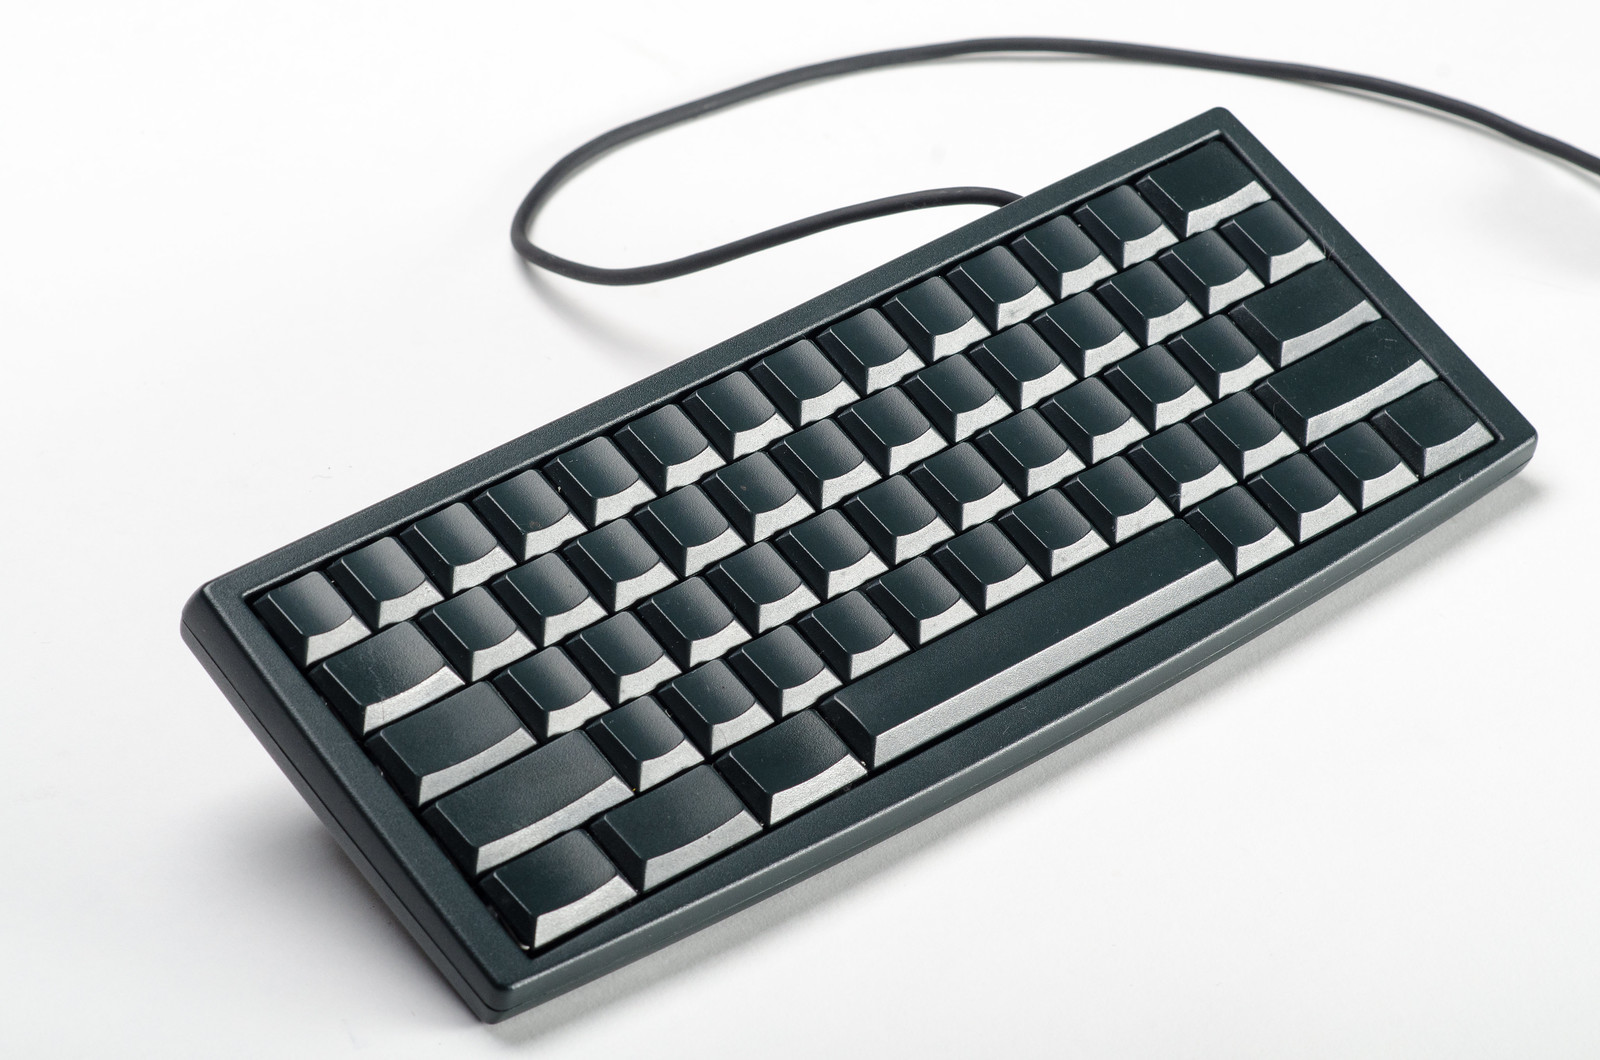 Apple Newton keyboard prototype